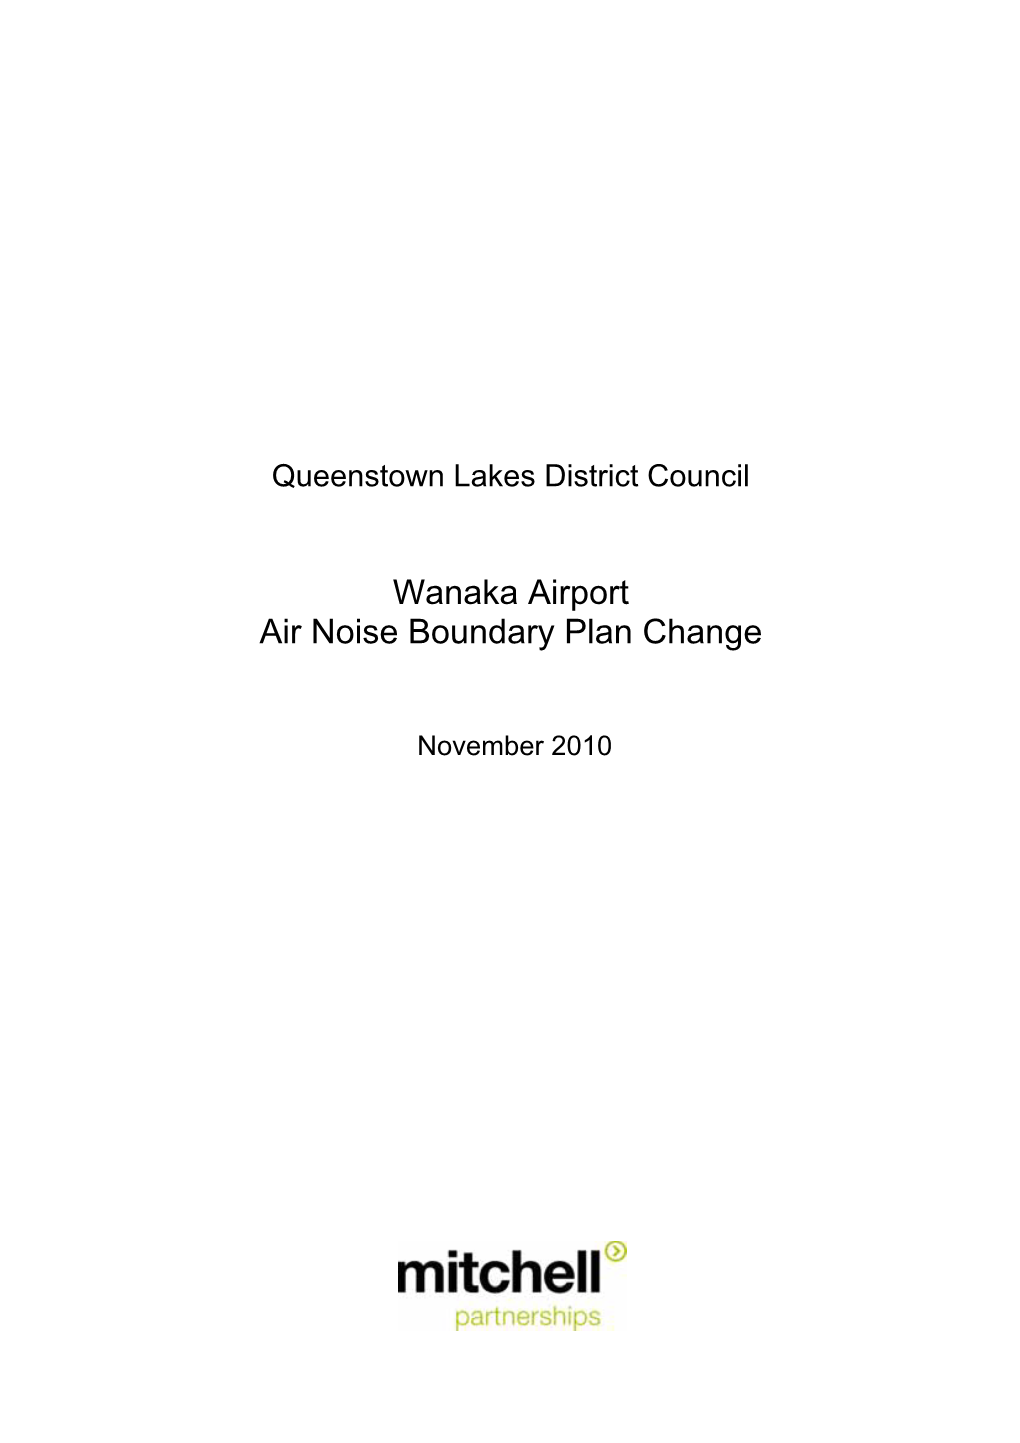 Wanaka Airport Air Noise Boundary Plan Change